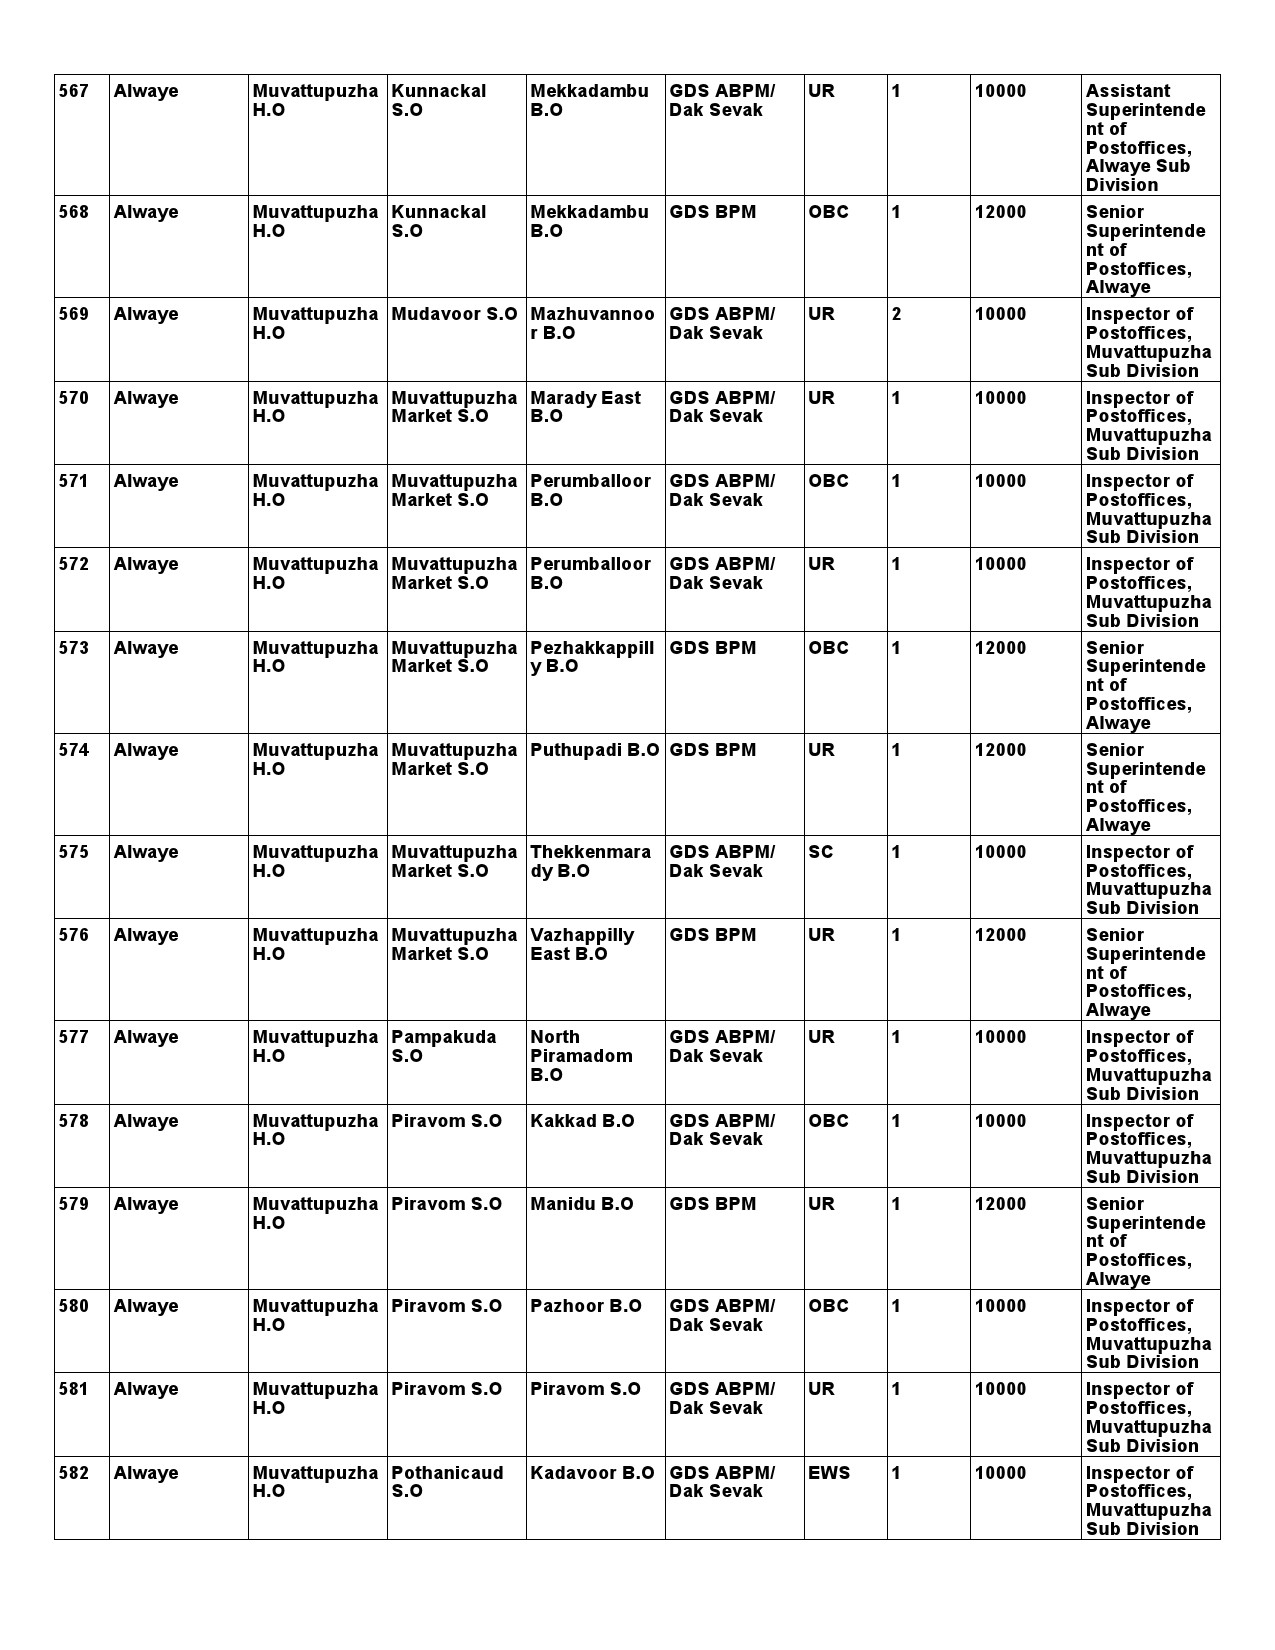 Kerala Postal Circle GDS Recruitment 2021 notification - Notification Image 56